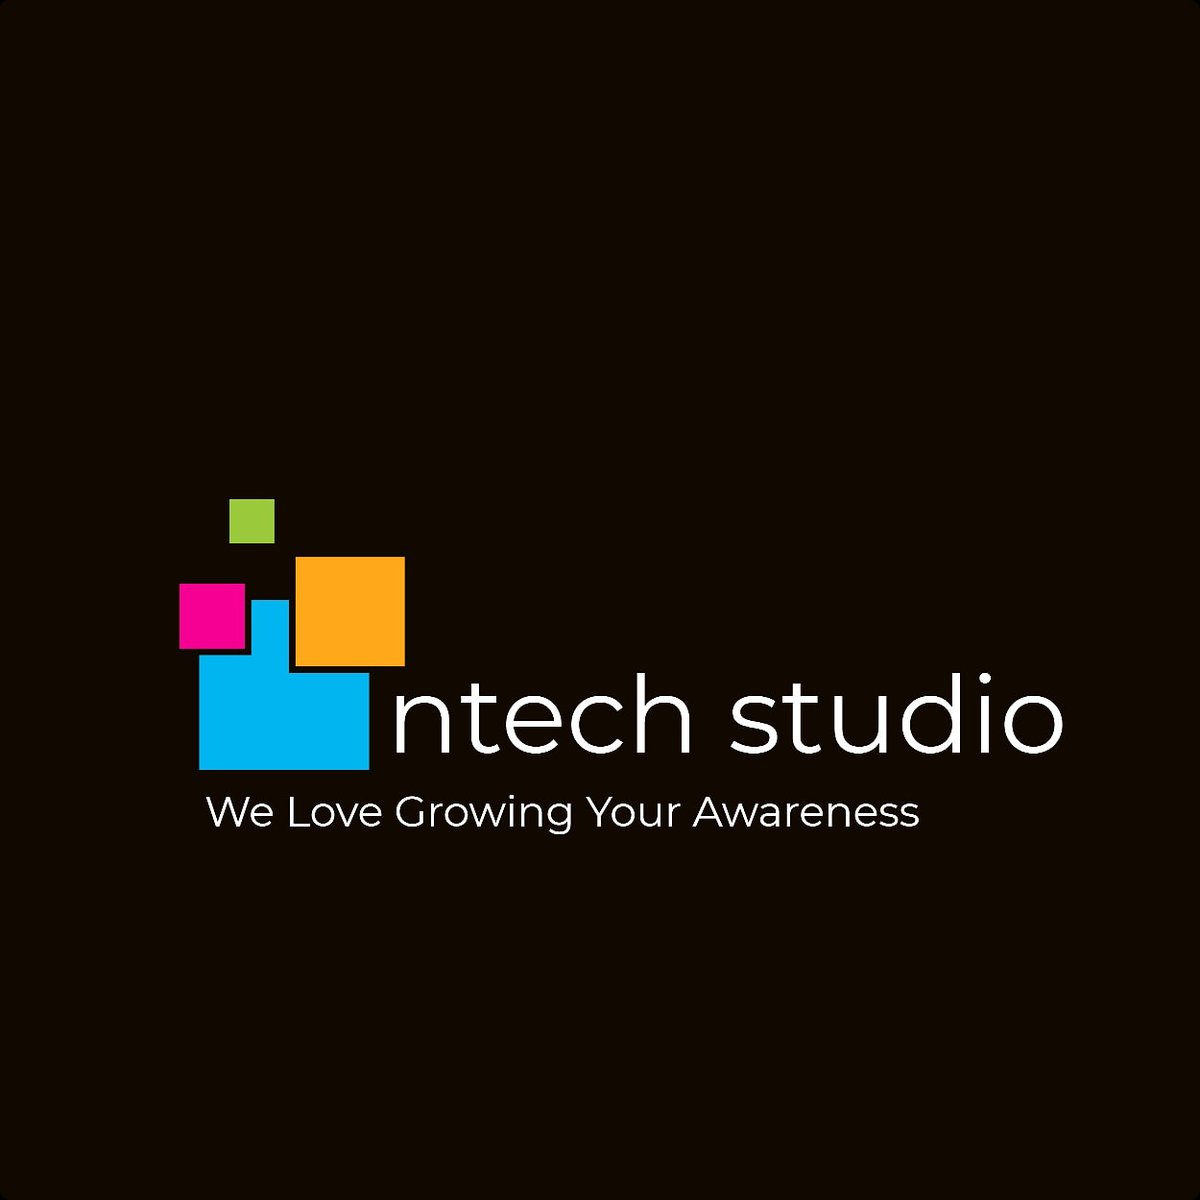 Ntech studio

Digital marketing services in Chandigarh, Zirkpur, Mohali, Panchkula
Drop what app for enquiry 
9056351232

#Chandigarh #DigitalMarketingServices #SEO #DigitalIndia #panchkula #zirkpur #mohali #PPC #digitalmarketingagency #digitalmarketingfreelacer